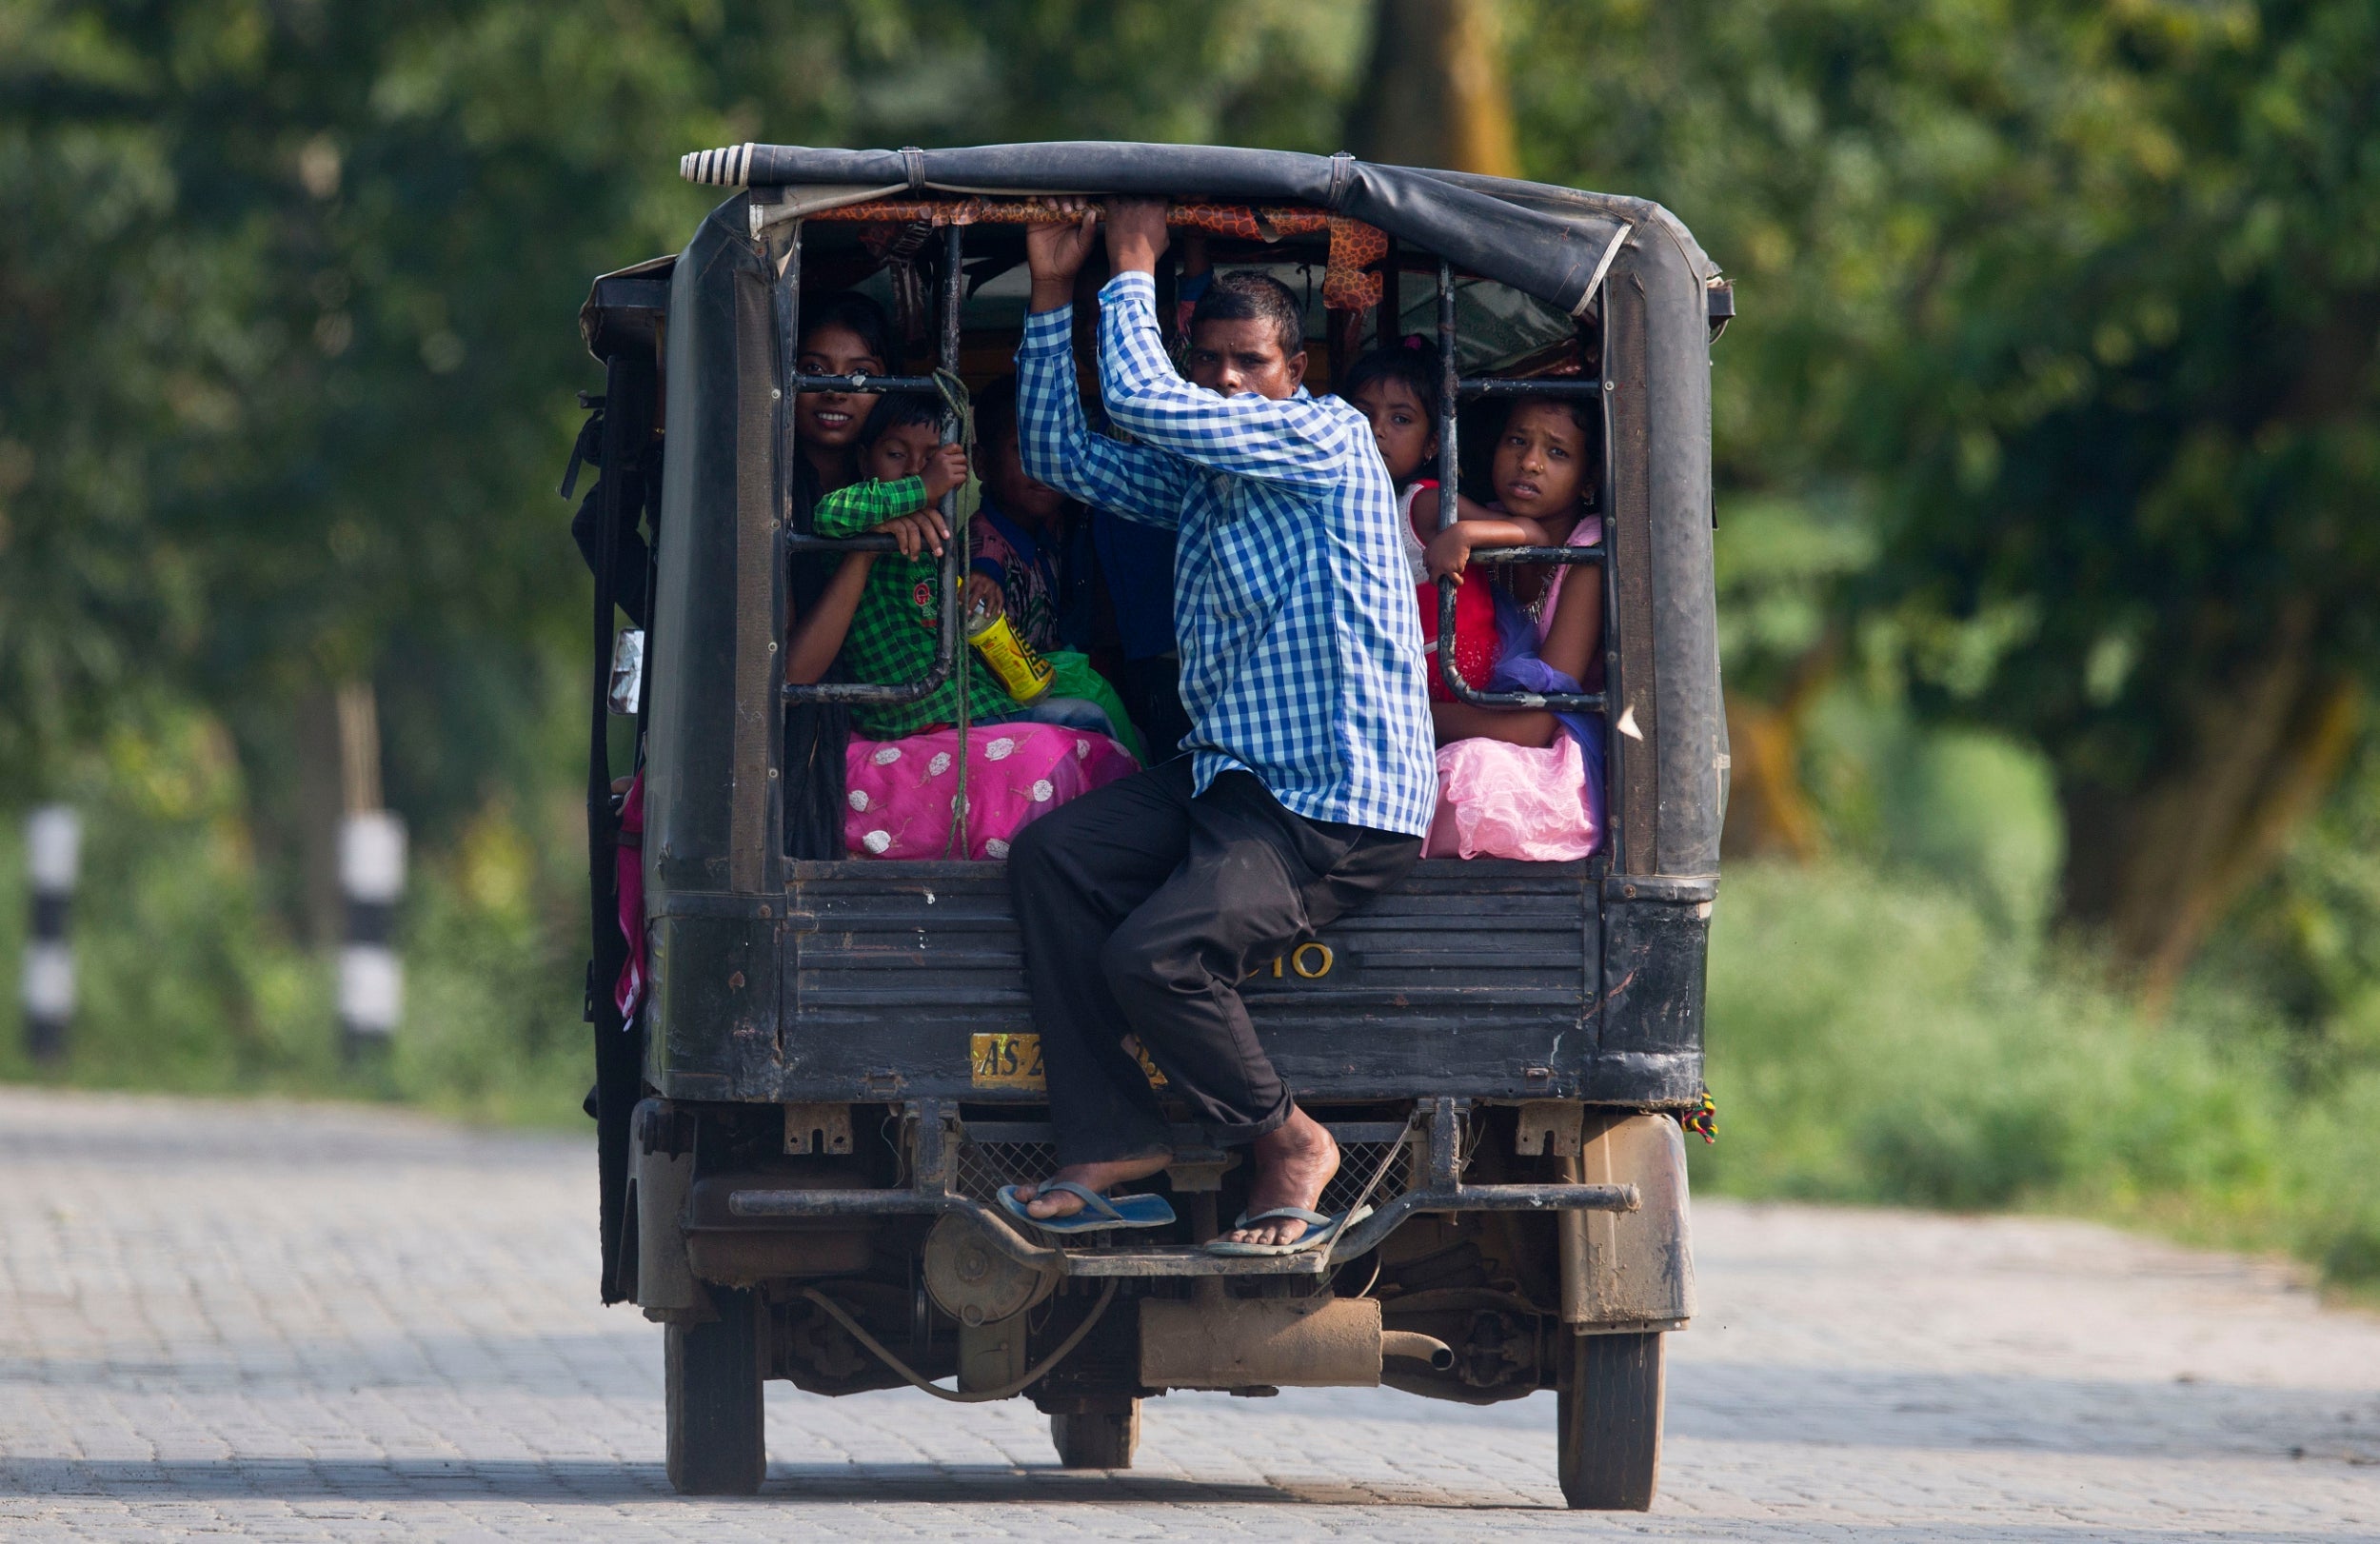 Indian passengers travel on an auto rickshaw on the outskirts of Gauhati, India